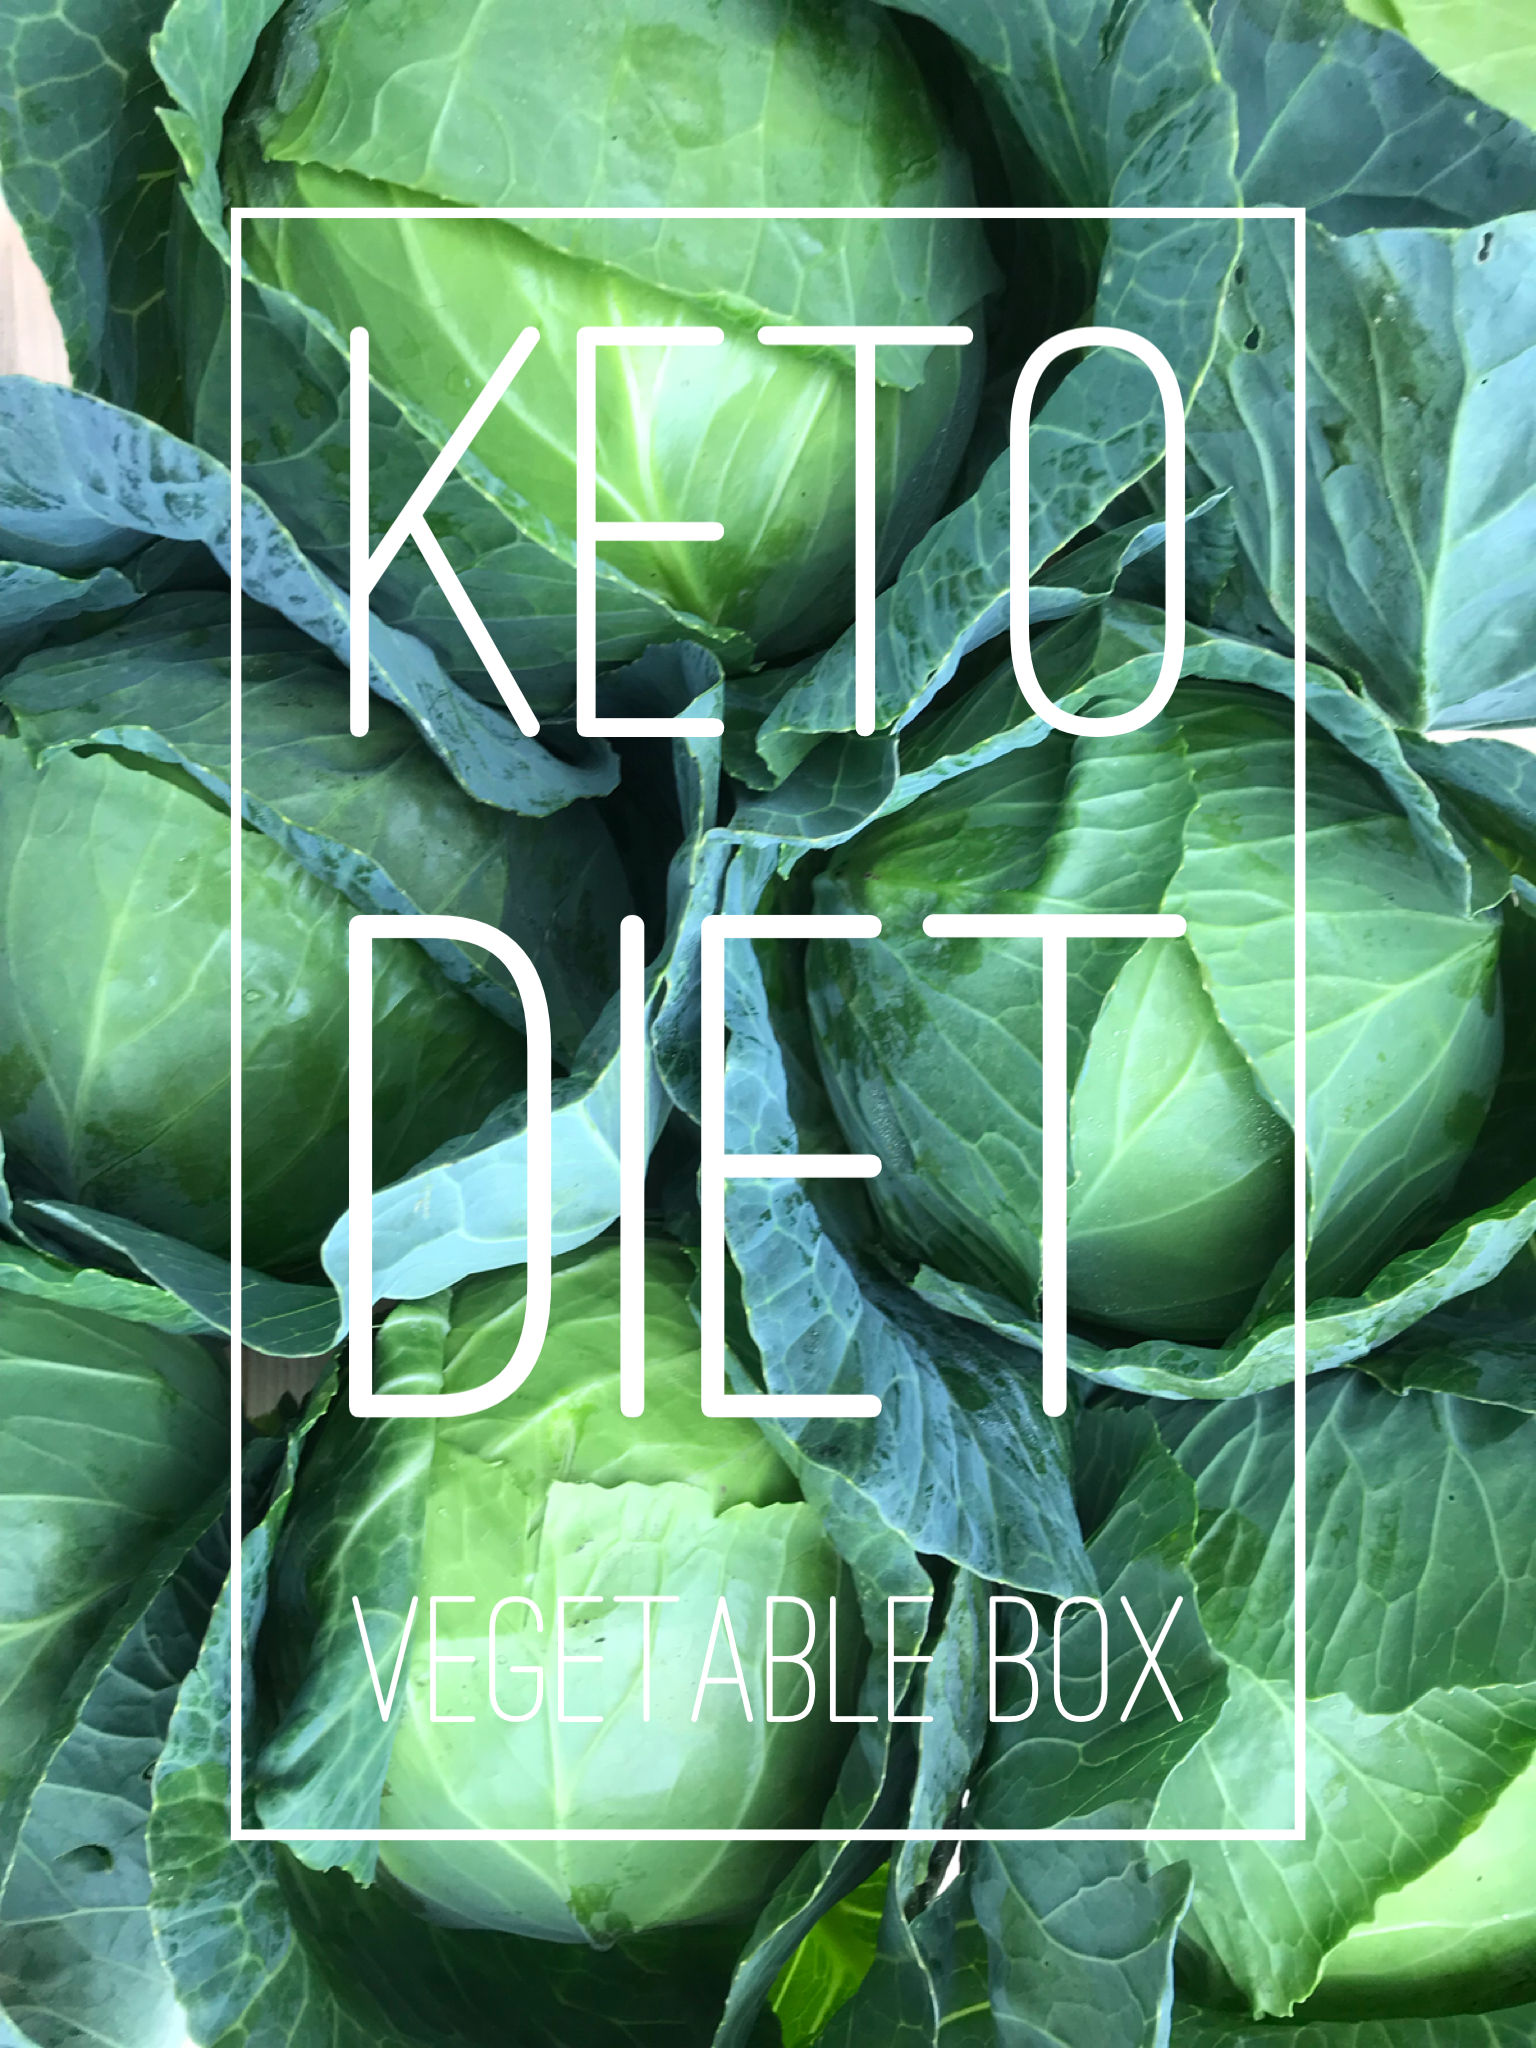 keto vegetable box delivered for free